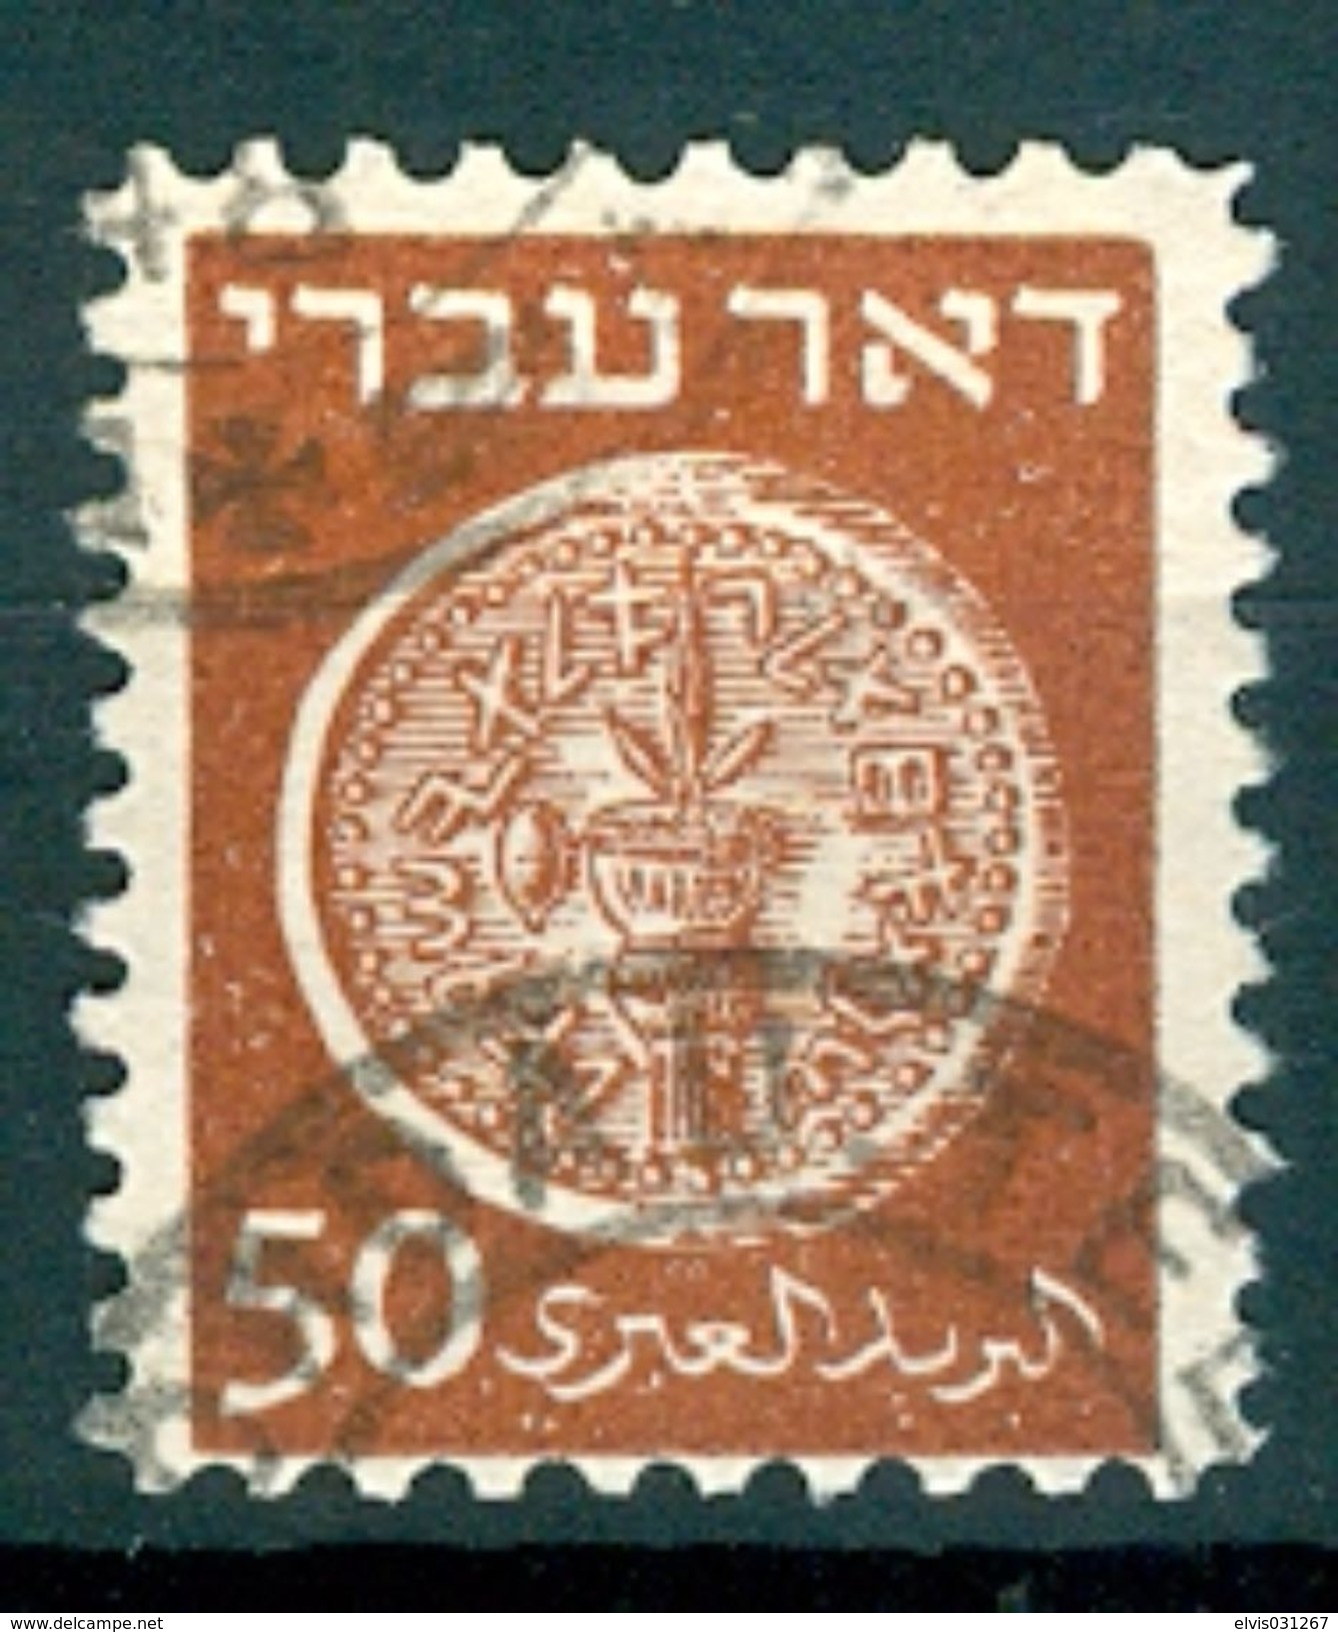 Israel - 1948, Michel/Philex No. : 6, Perf: 10/11 !!! - DOAR IVRI - 1st Coins - USED - *** - No Tab - Neufs (sans Tabs)